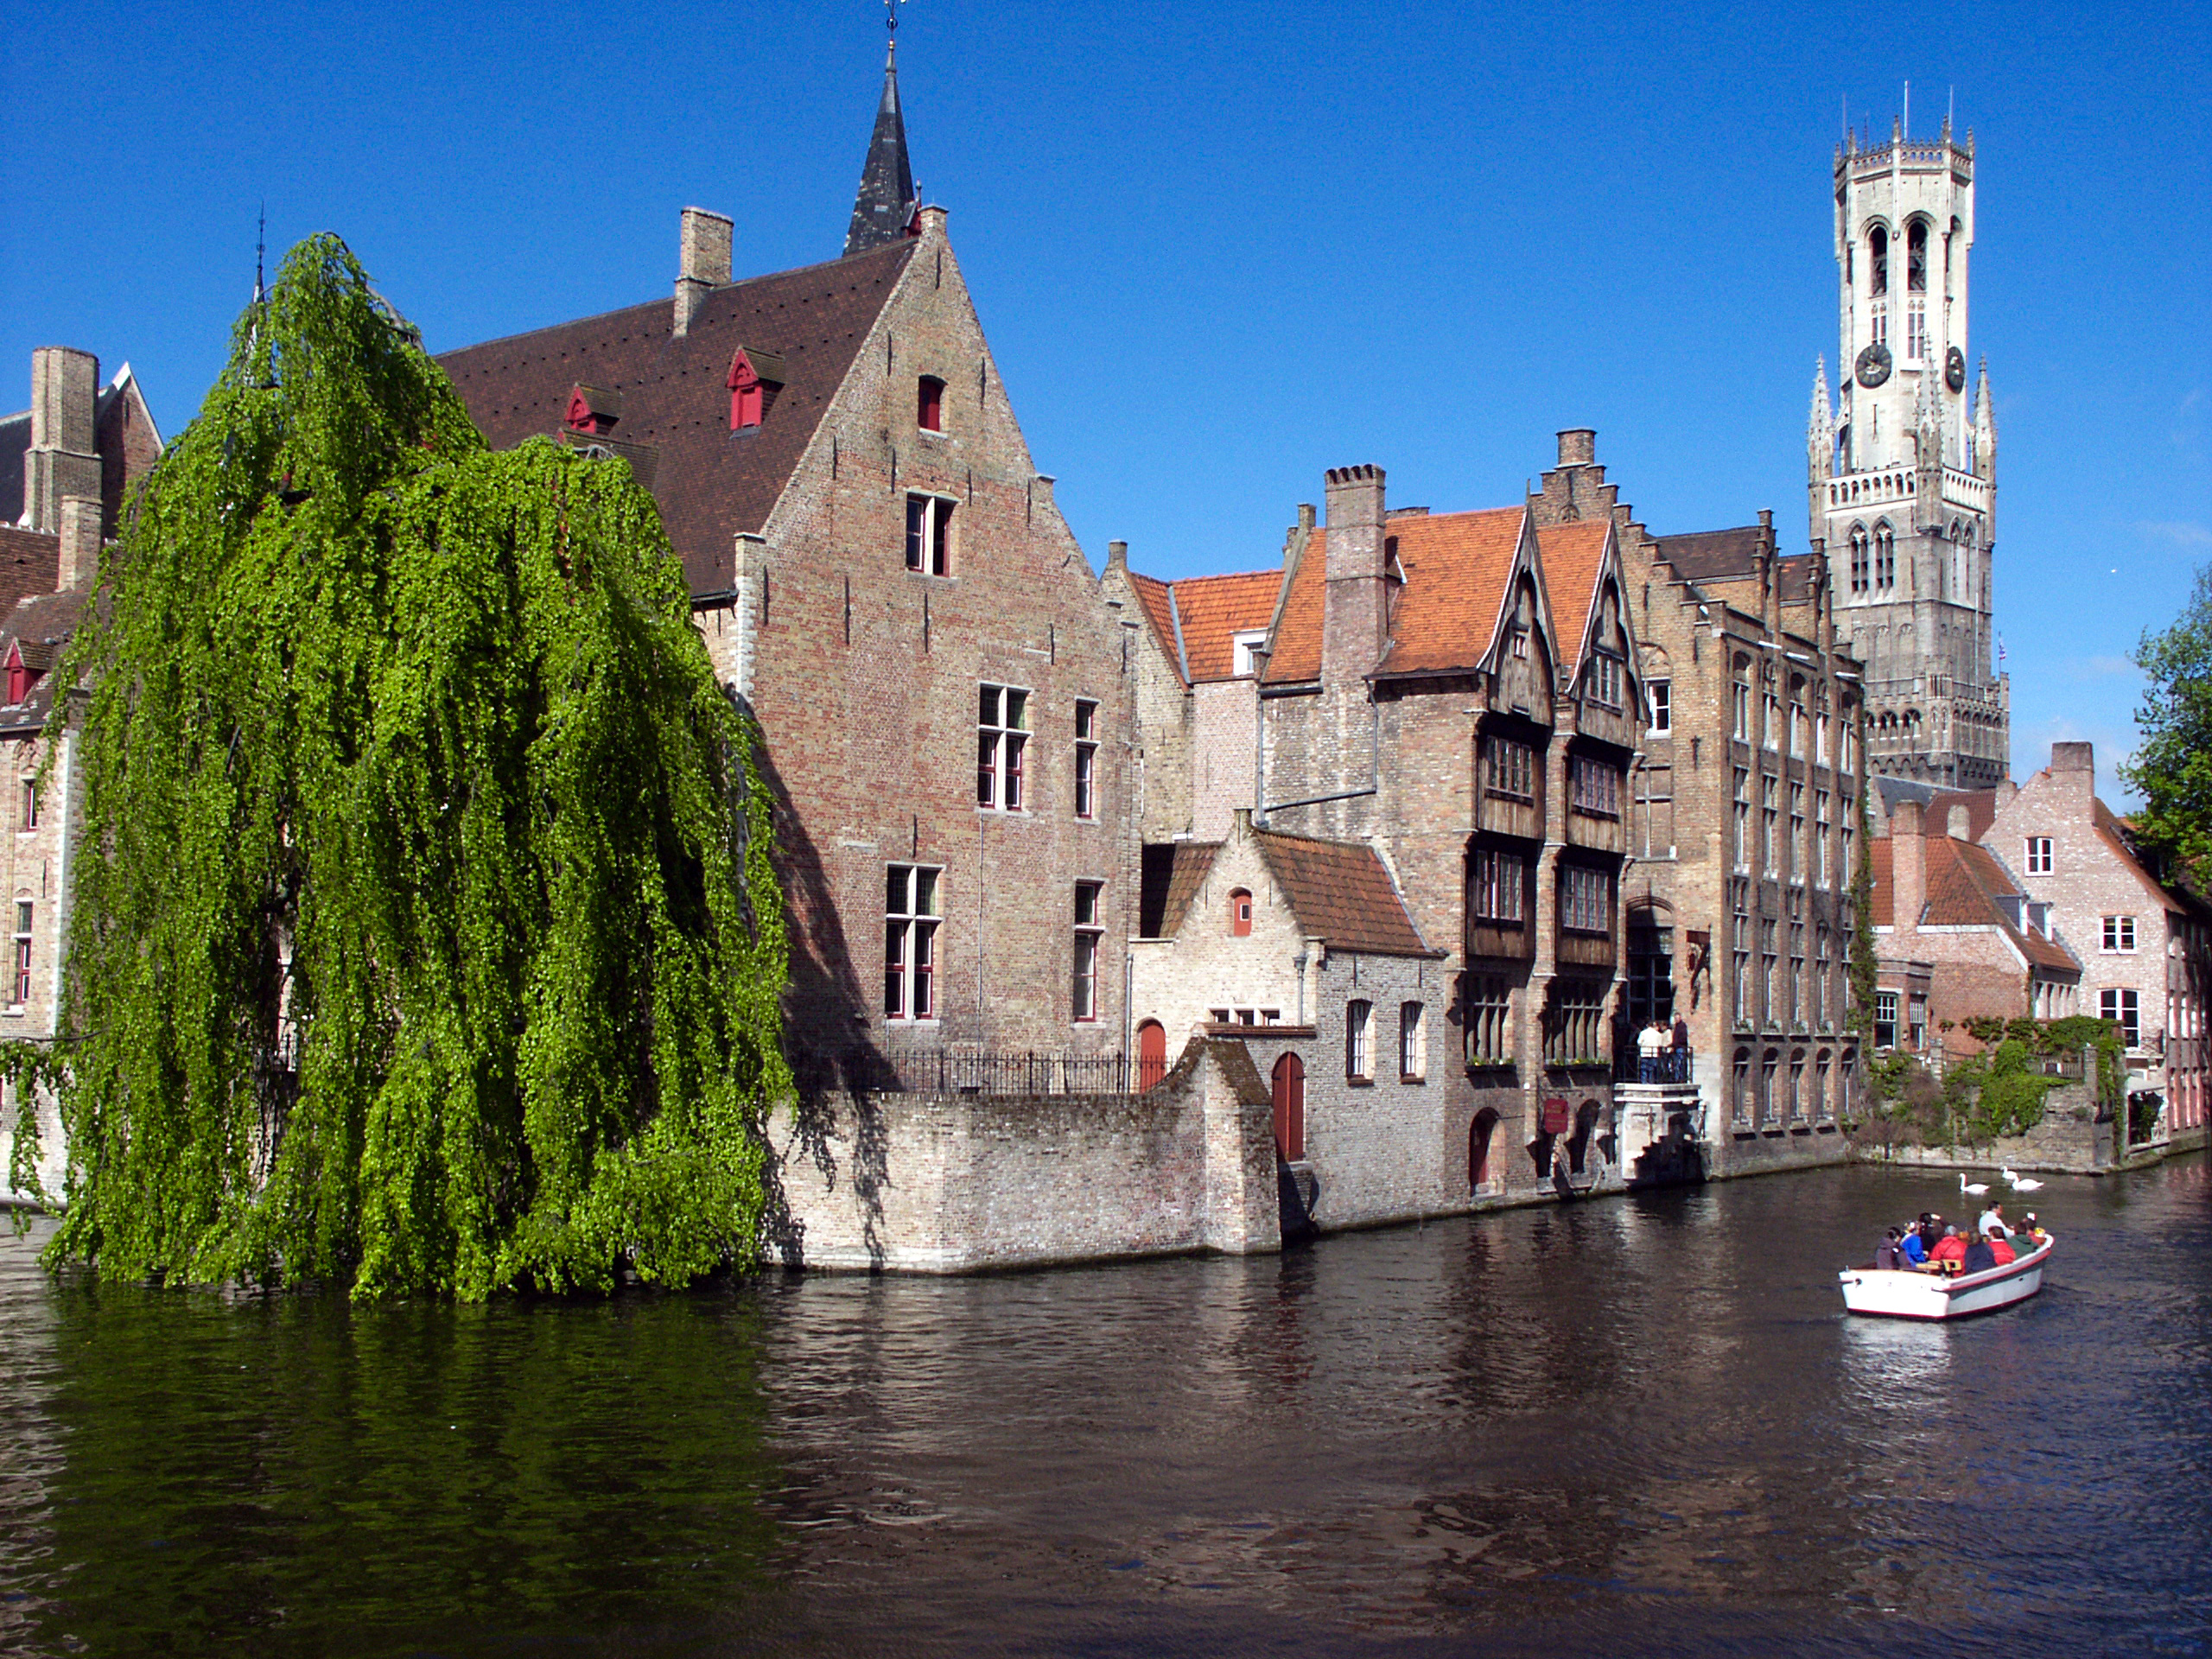 File:Brugge-CanalRozenhoedkaai.JPG - Wikimedia Commons